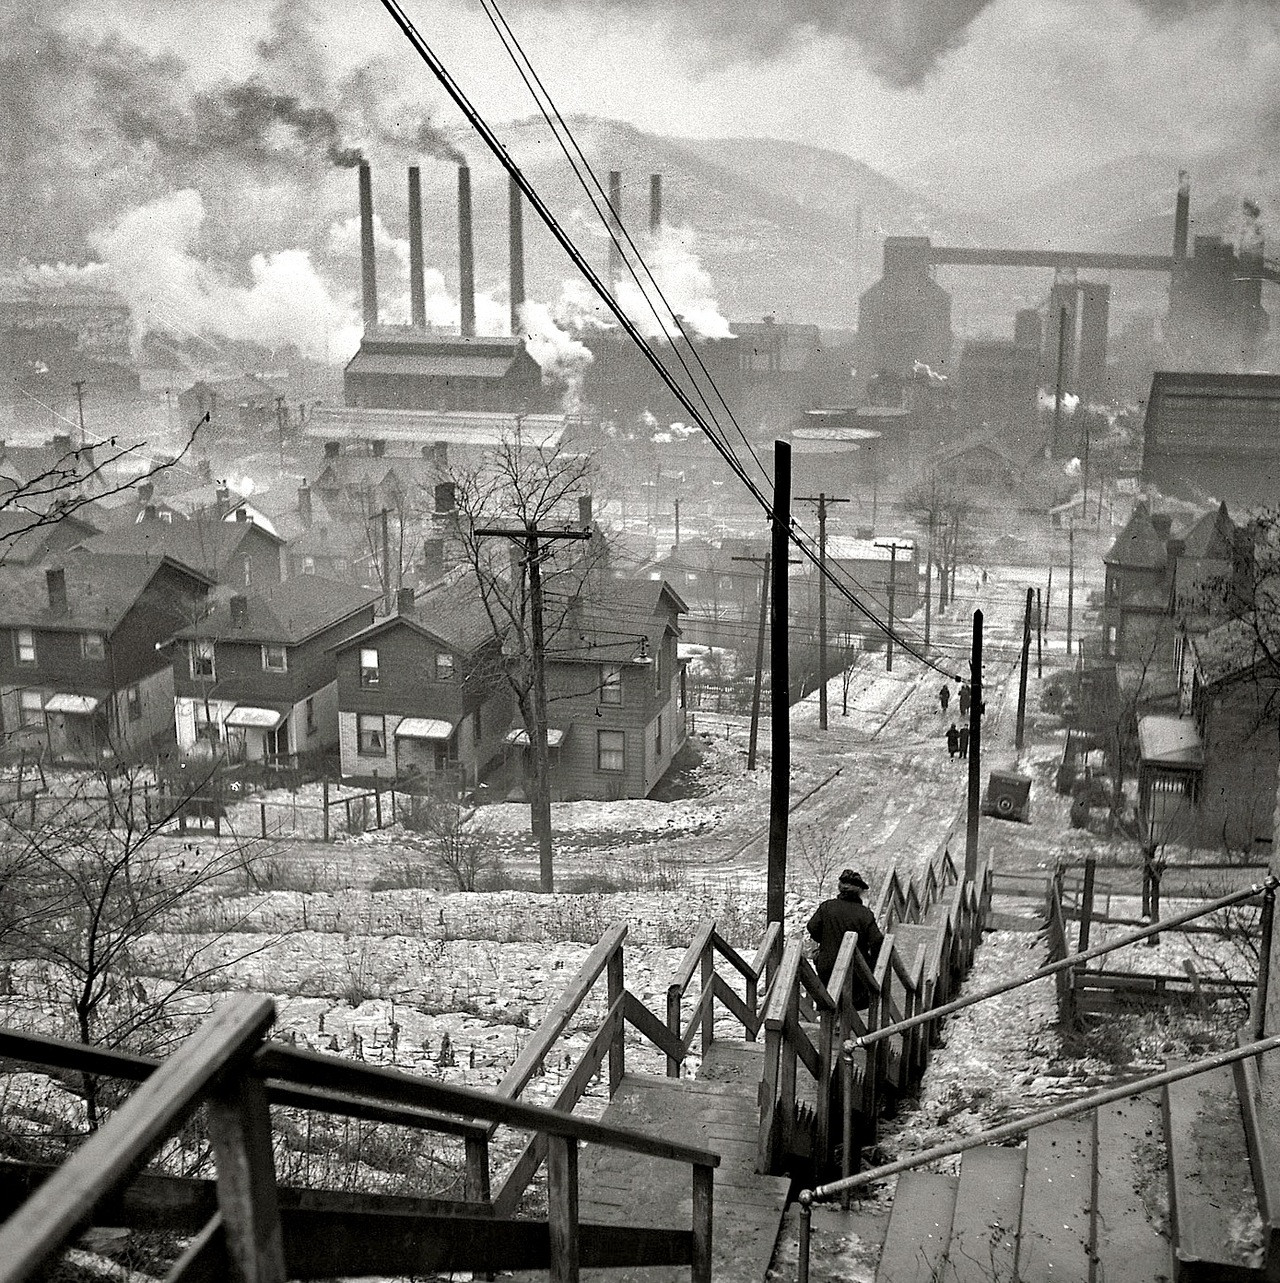 Pittsburgh, Pennsylvania, 1940 by Jack Delano